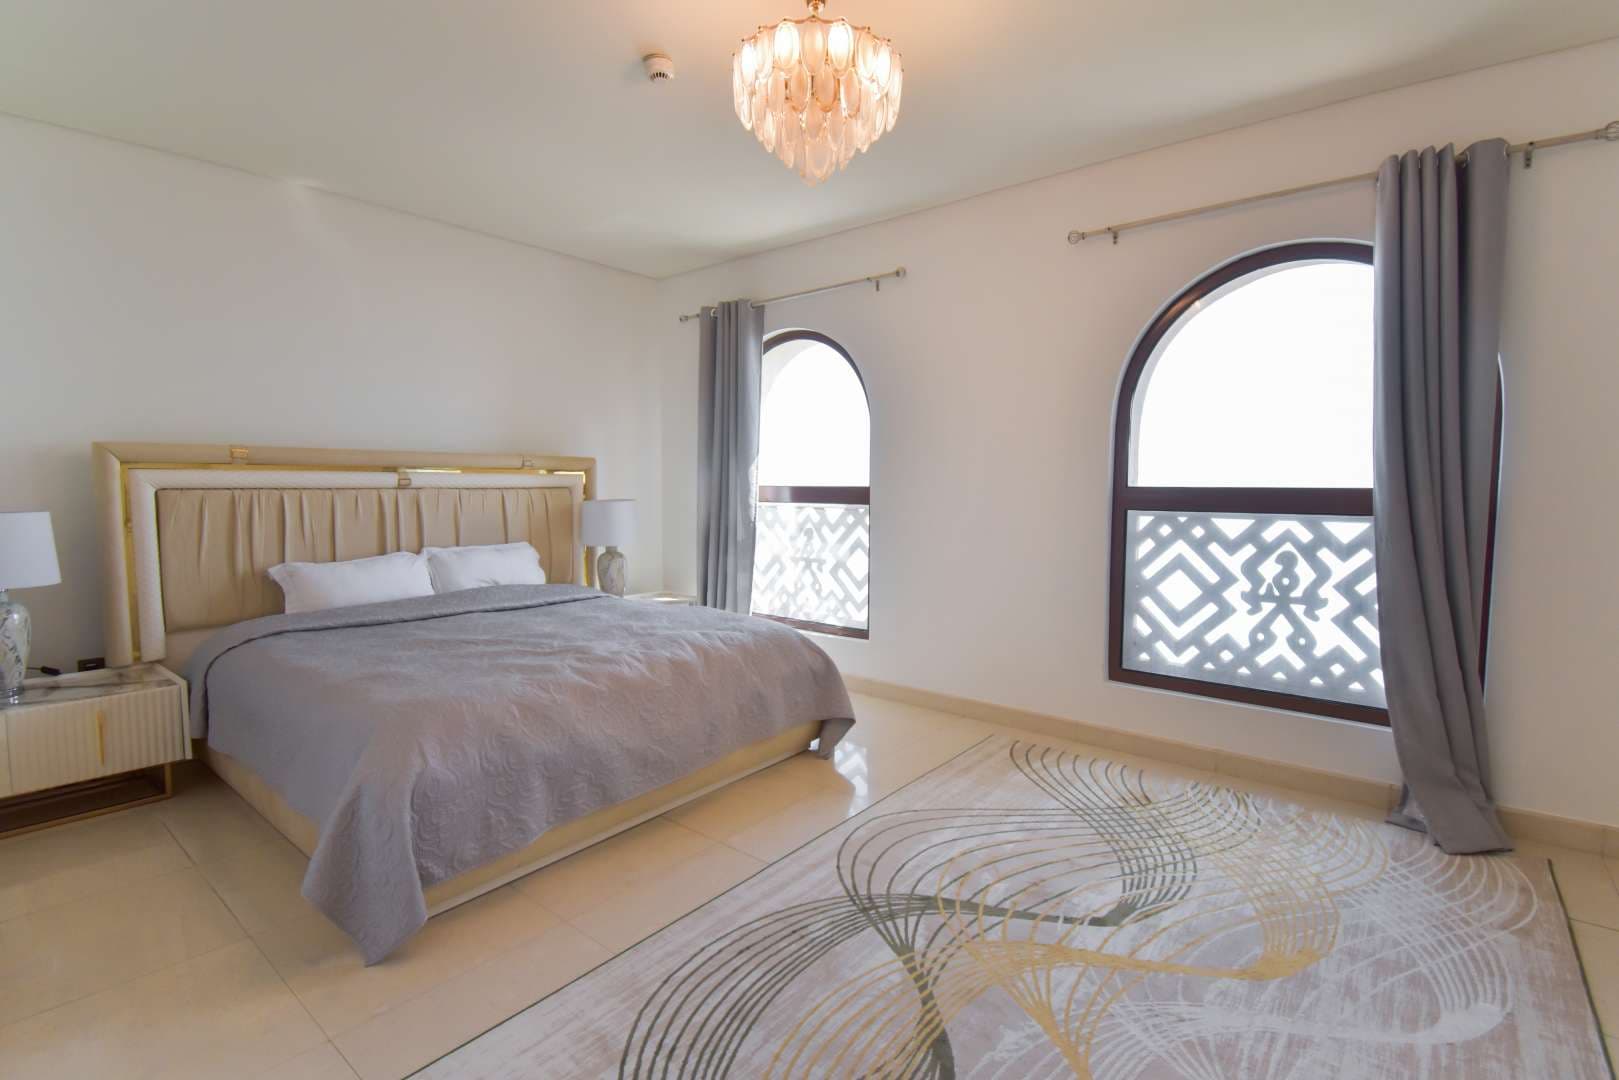 4 Bedroom Apartment For Sale Kingdom Of Sheba Lp10846 1598bbb4e1941100.jpg